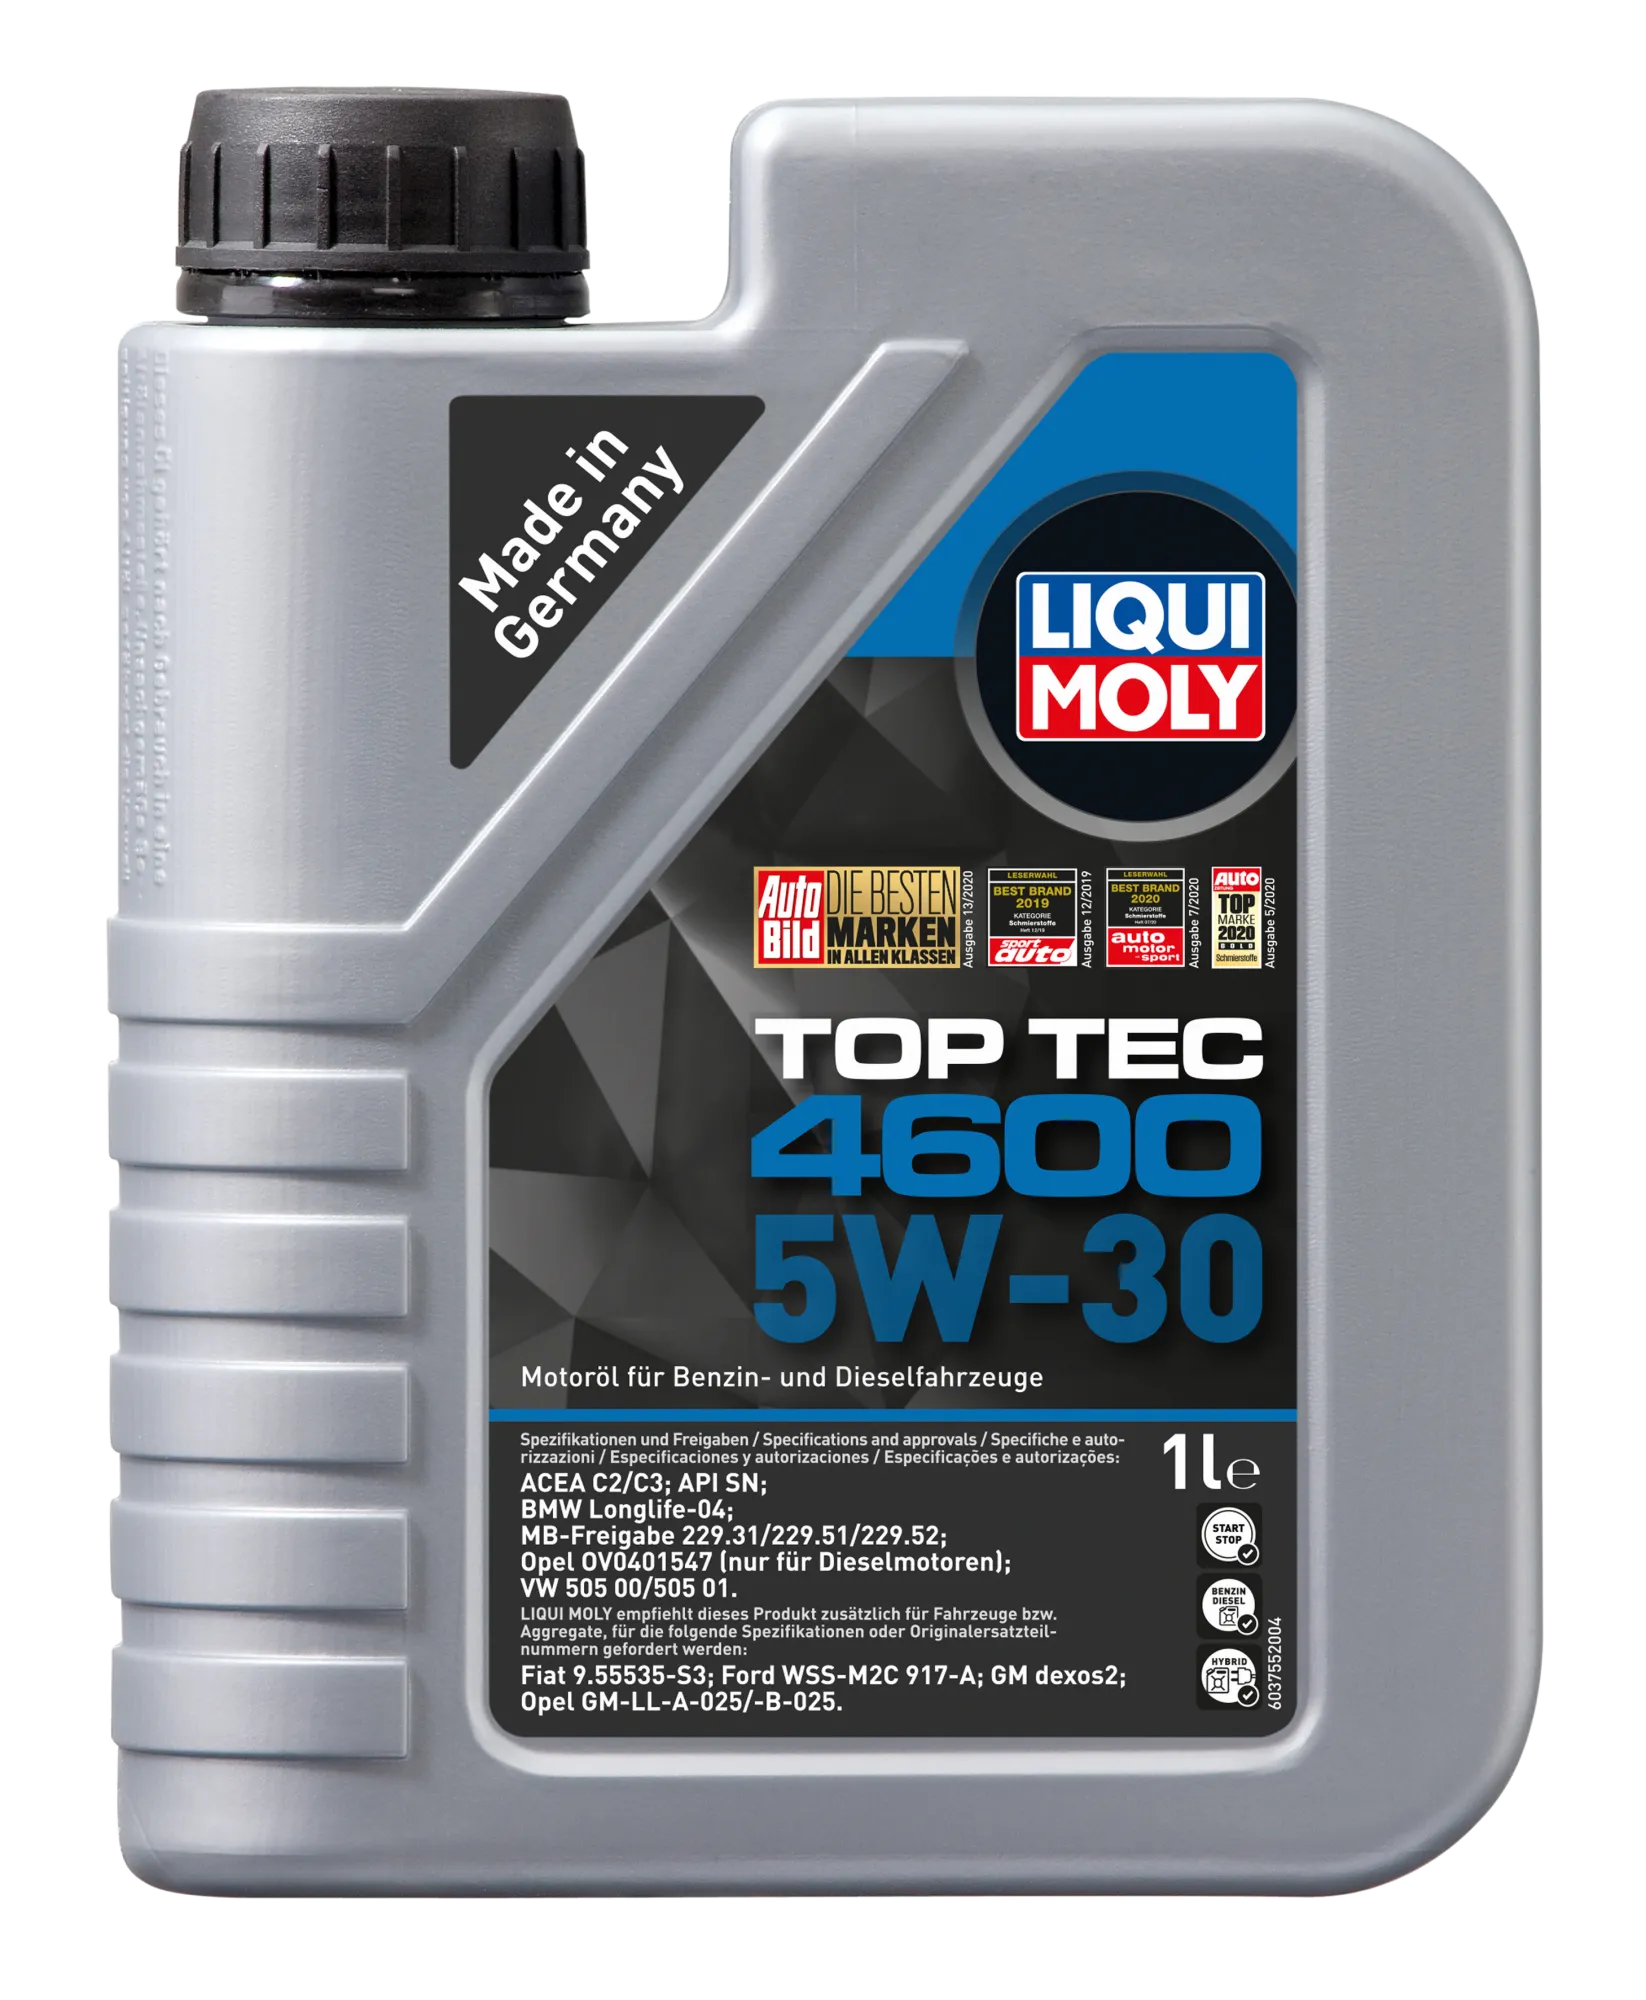 Liqui Moly 5W30 Top Tec 4600 Synthetisch Motorolie 2315 (1L) Longlife-04 C2/C3 dexos2 4100420037559